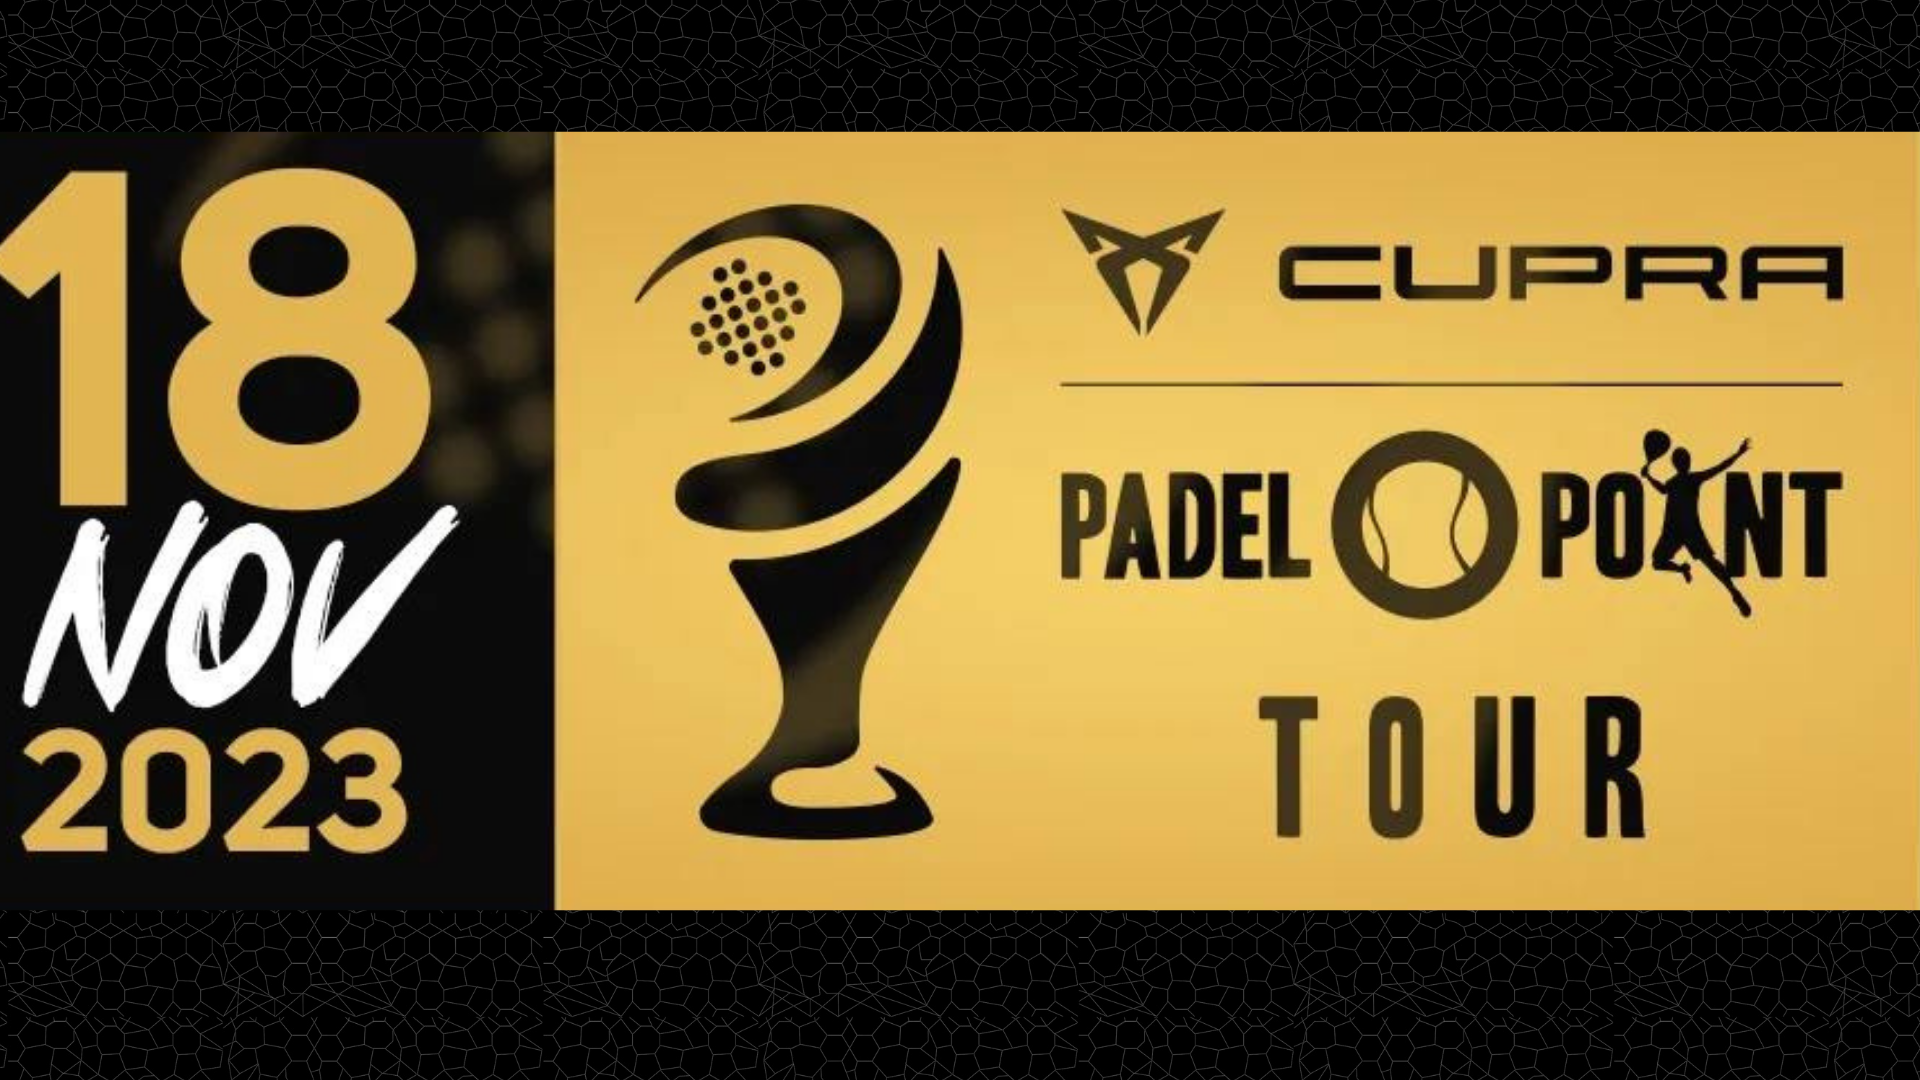 Cupra Master Final Padel Point tour 2023 November 18